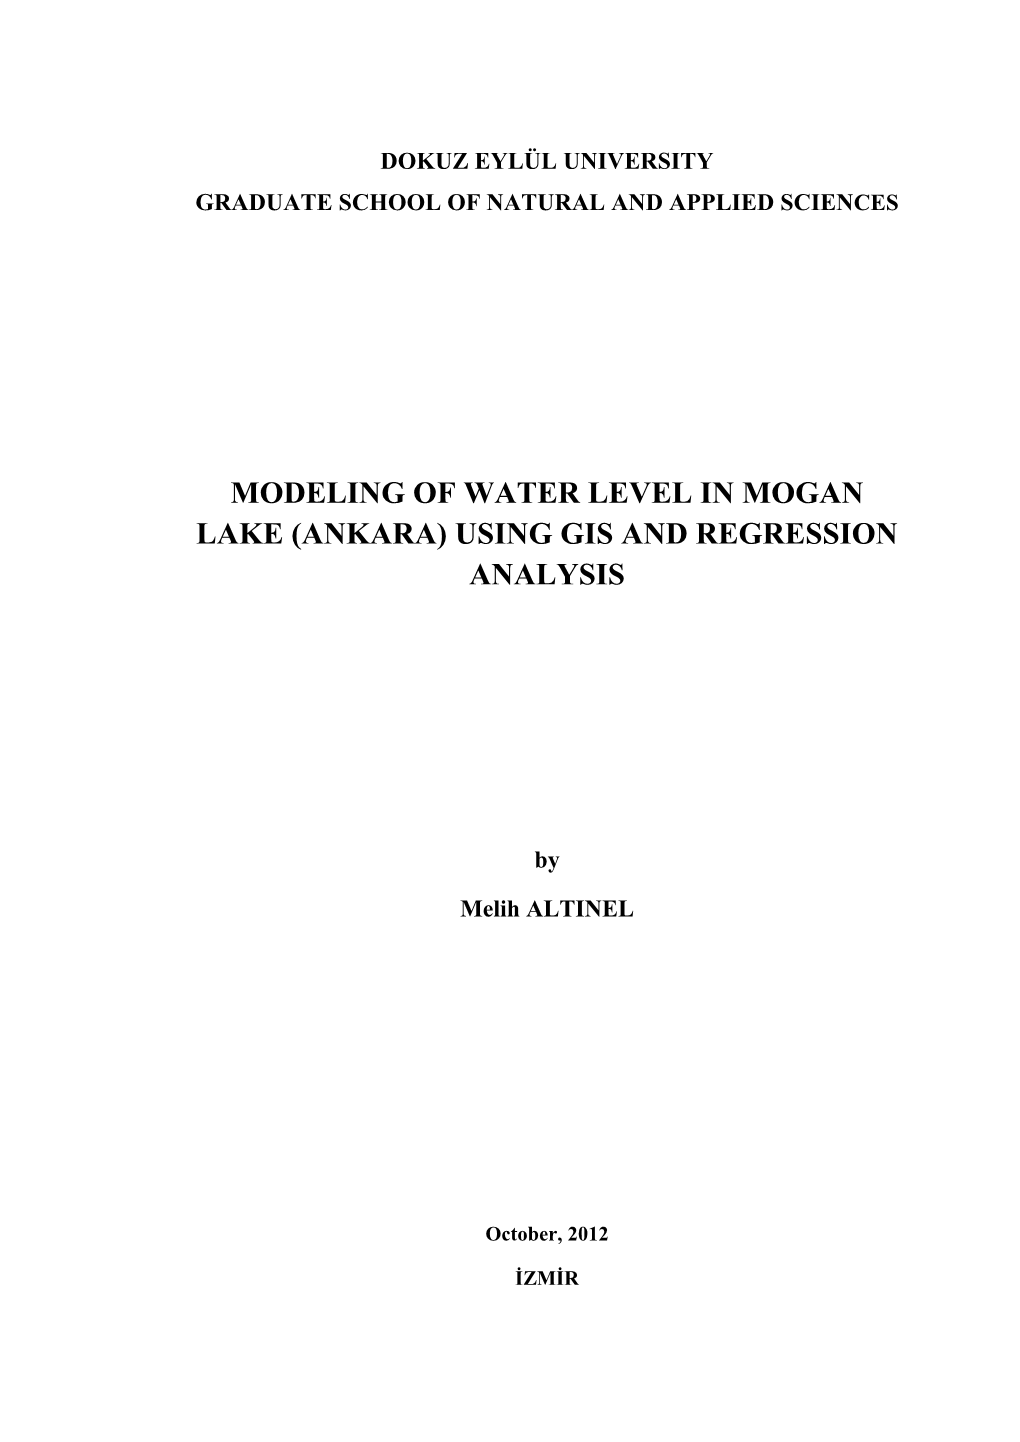 Modeling of Water Level in Mogan Lake (Ankara) Using Gis and Regression Analysis